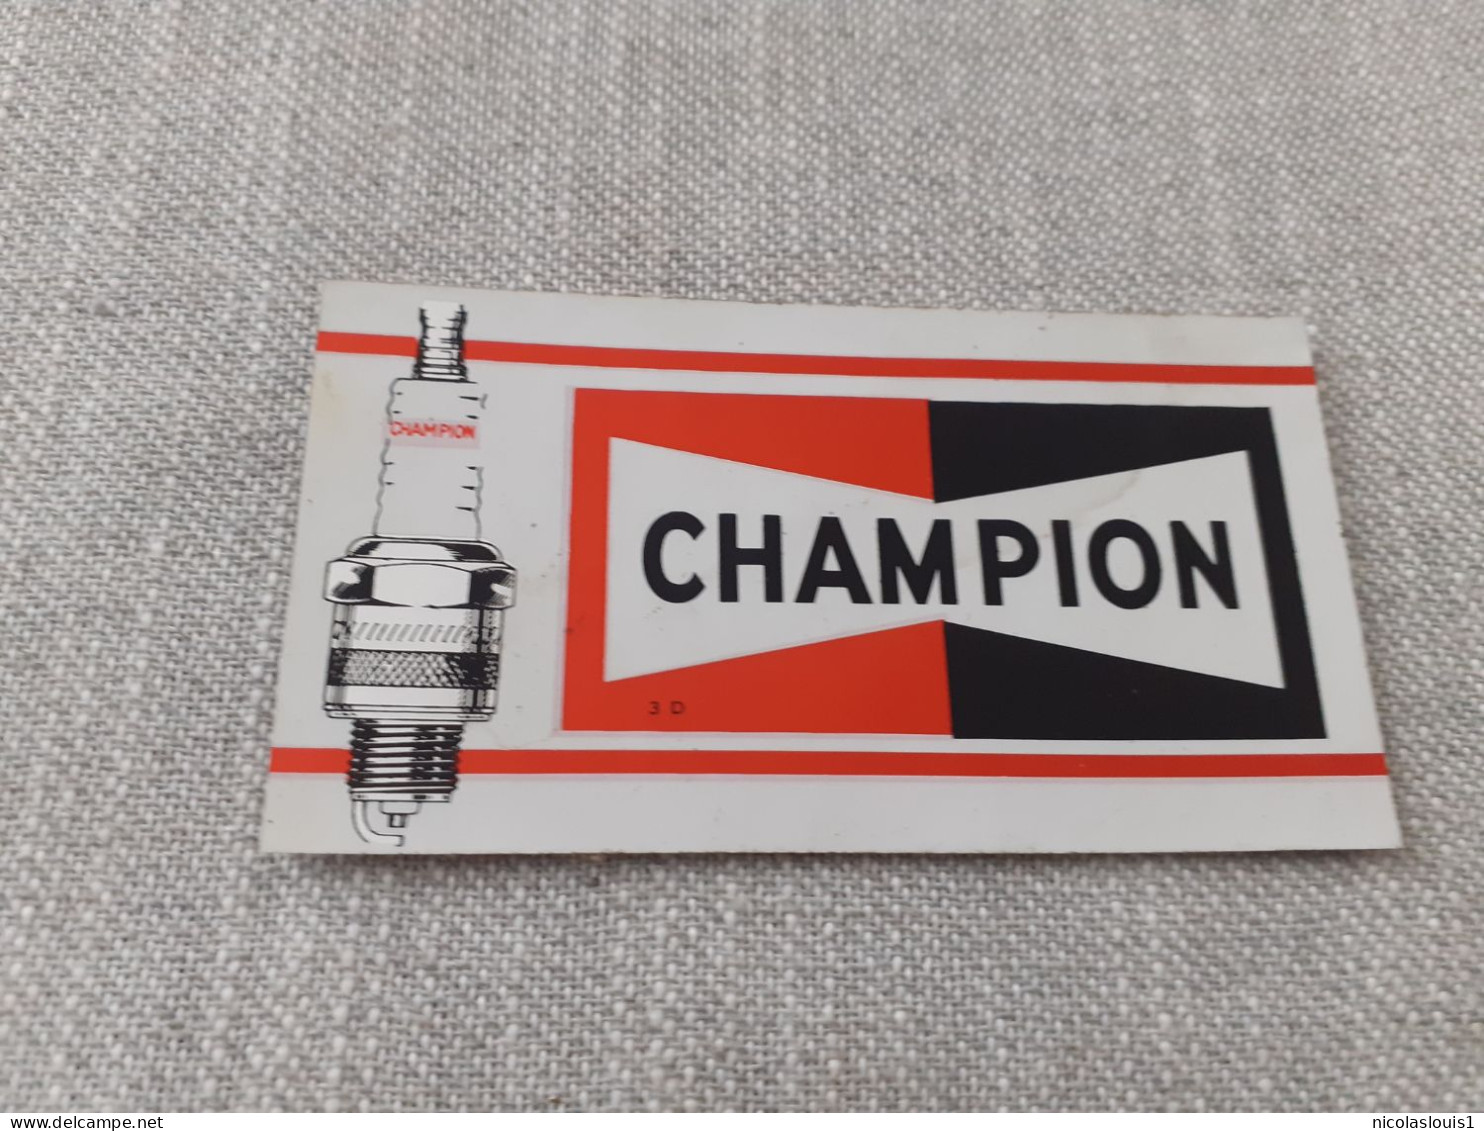 Autocollant Bougies Champion - Stickers